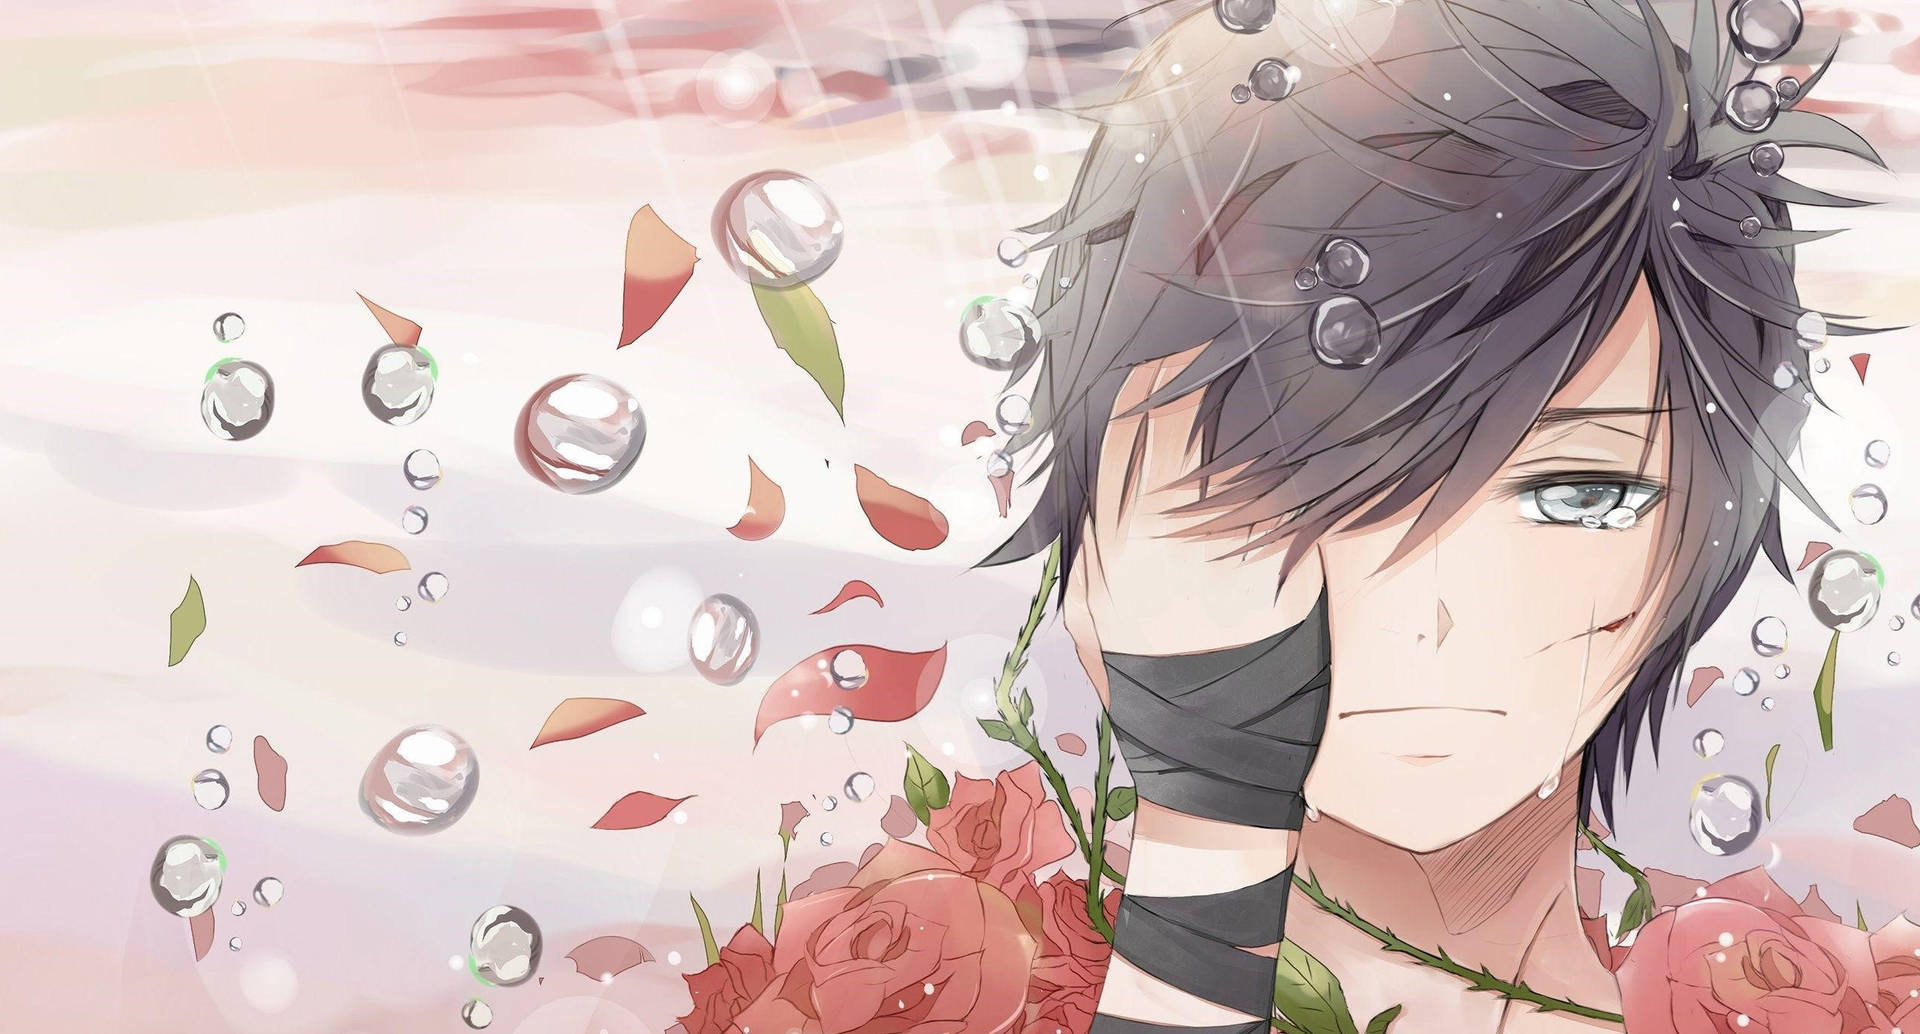 Sad Anime Boy With Red Flowers